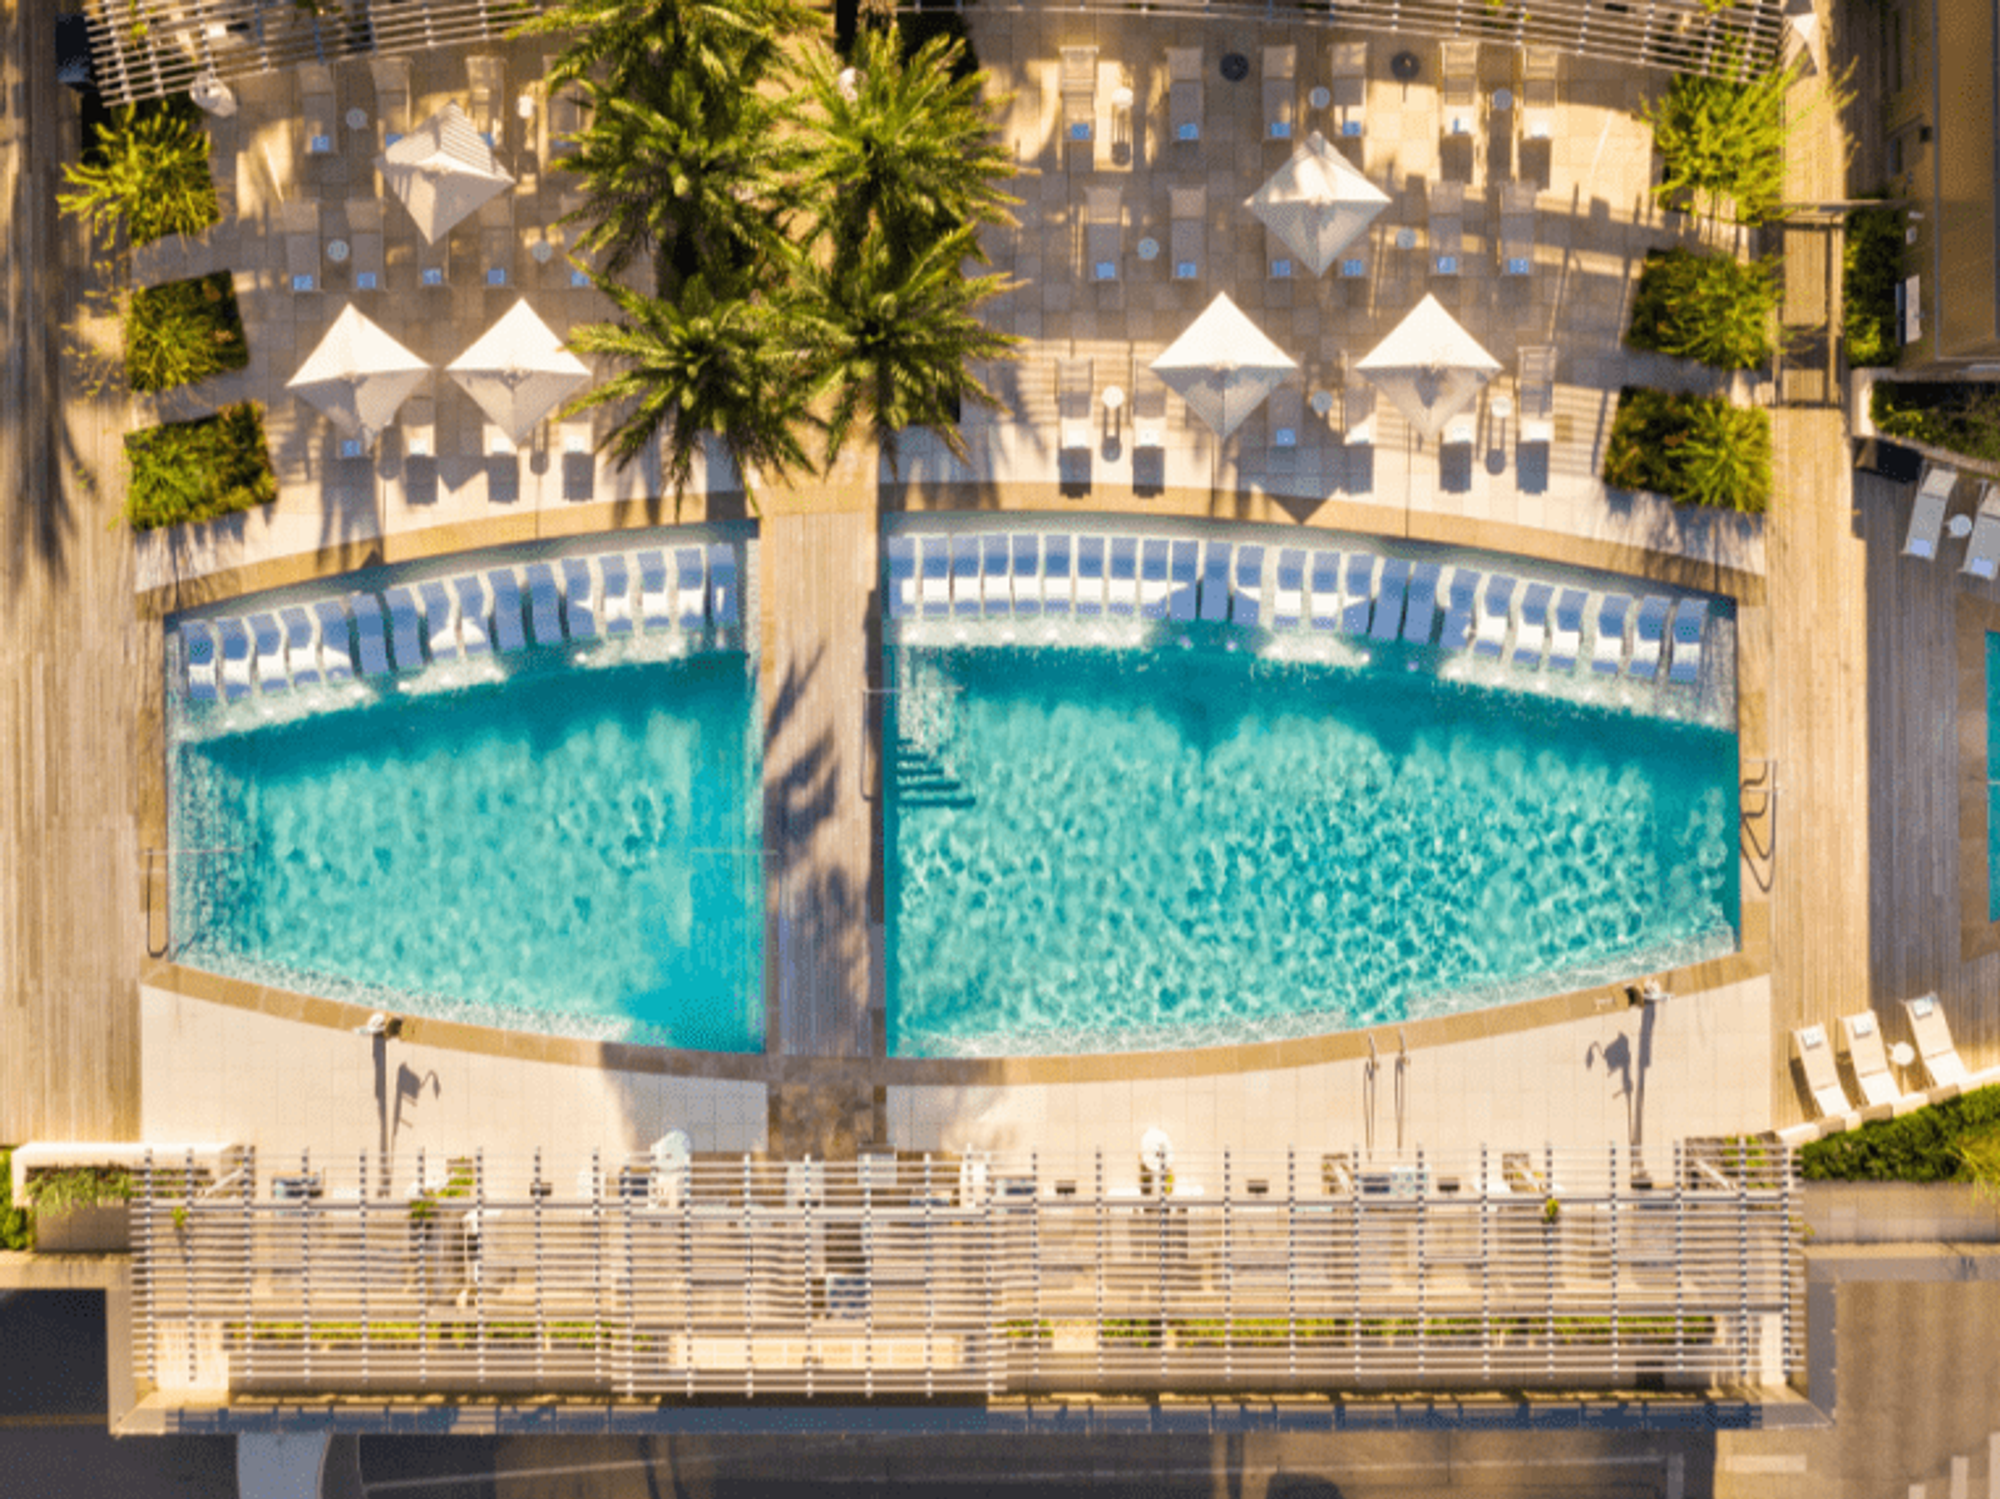 Fairmont Hotel Austin pool